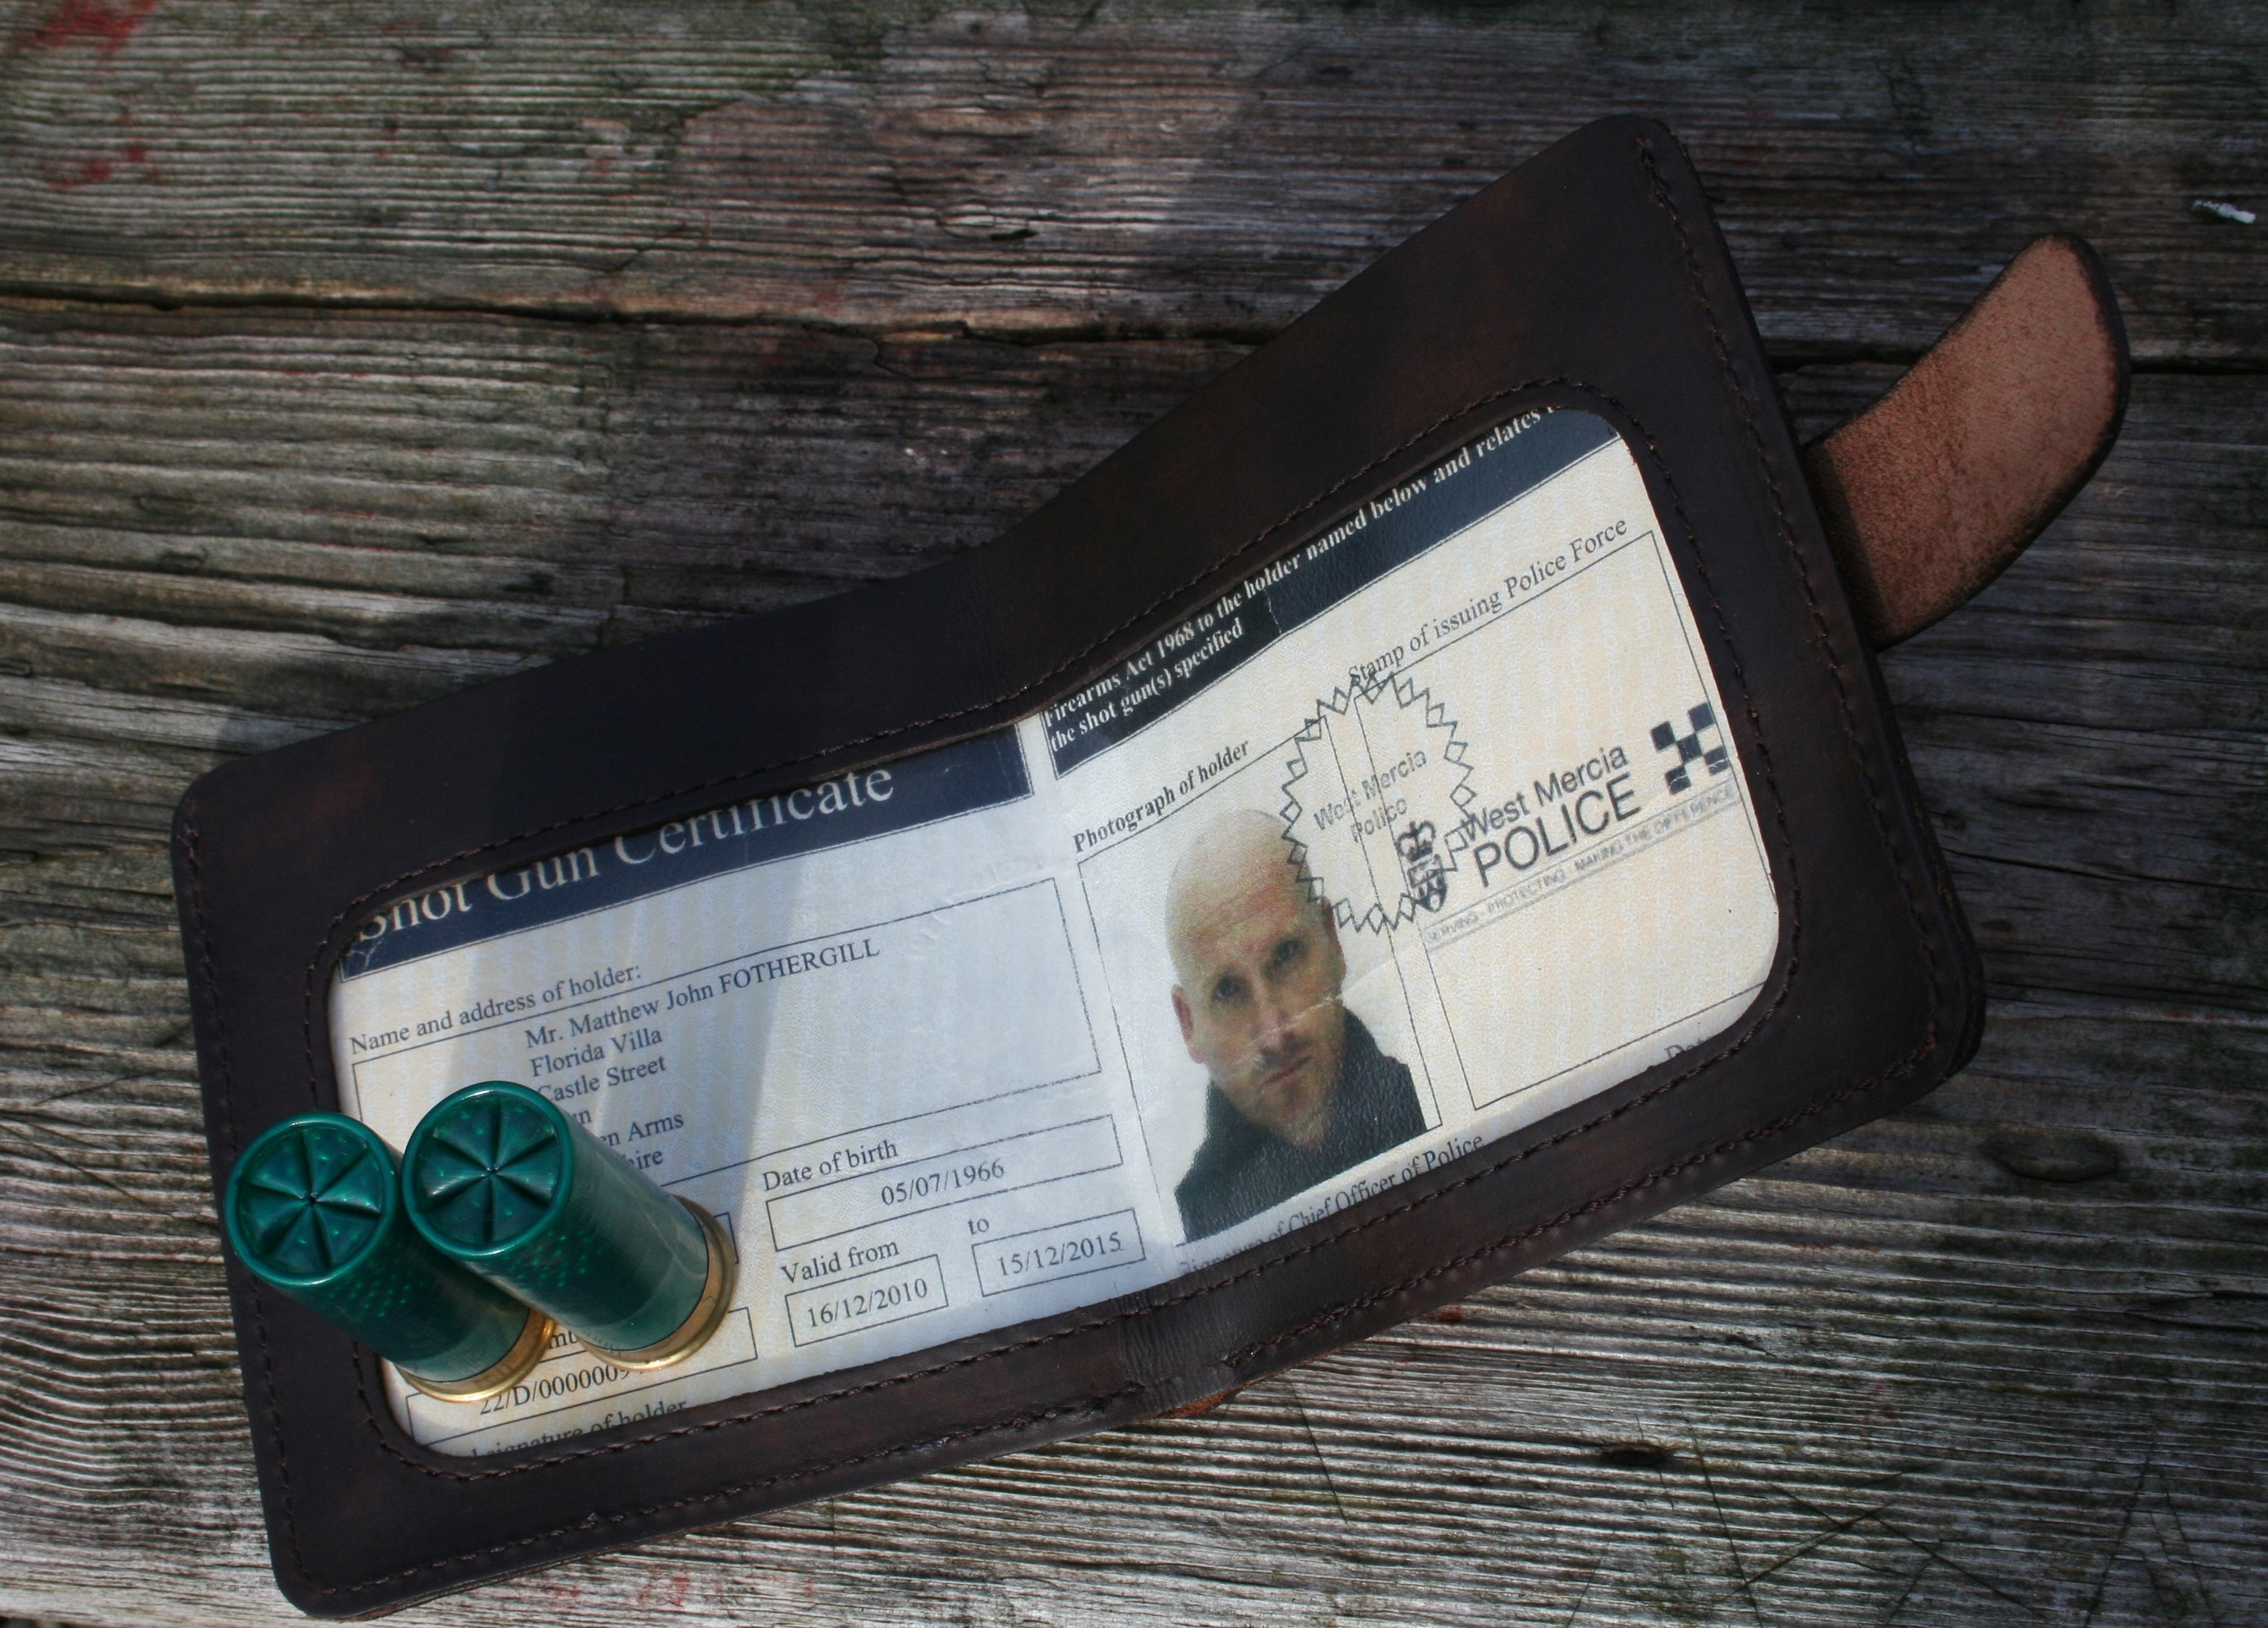 Shotgun licence wallet